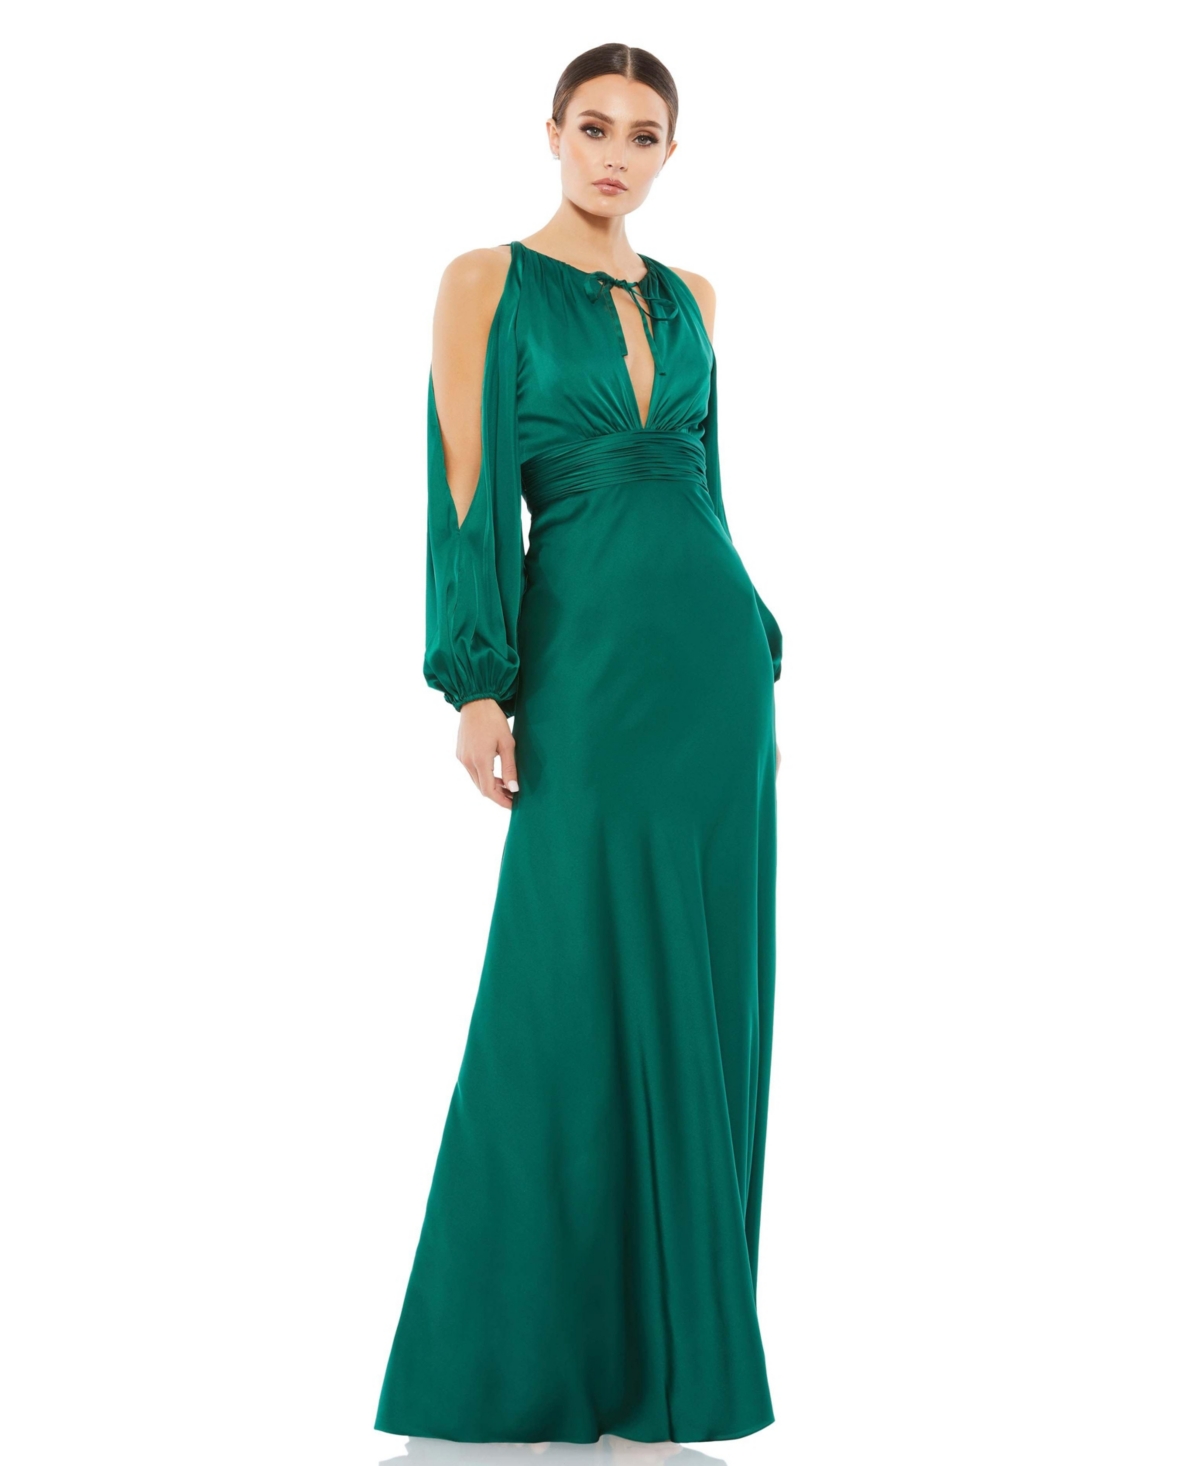 1970s Formal Dress, Evening Gown Photos Womens Ieena Tied Keyhole Cold Shoulder Bishop Sleeve Gown - Emerald $398.00 AT vintagedancer.com